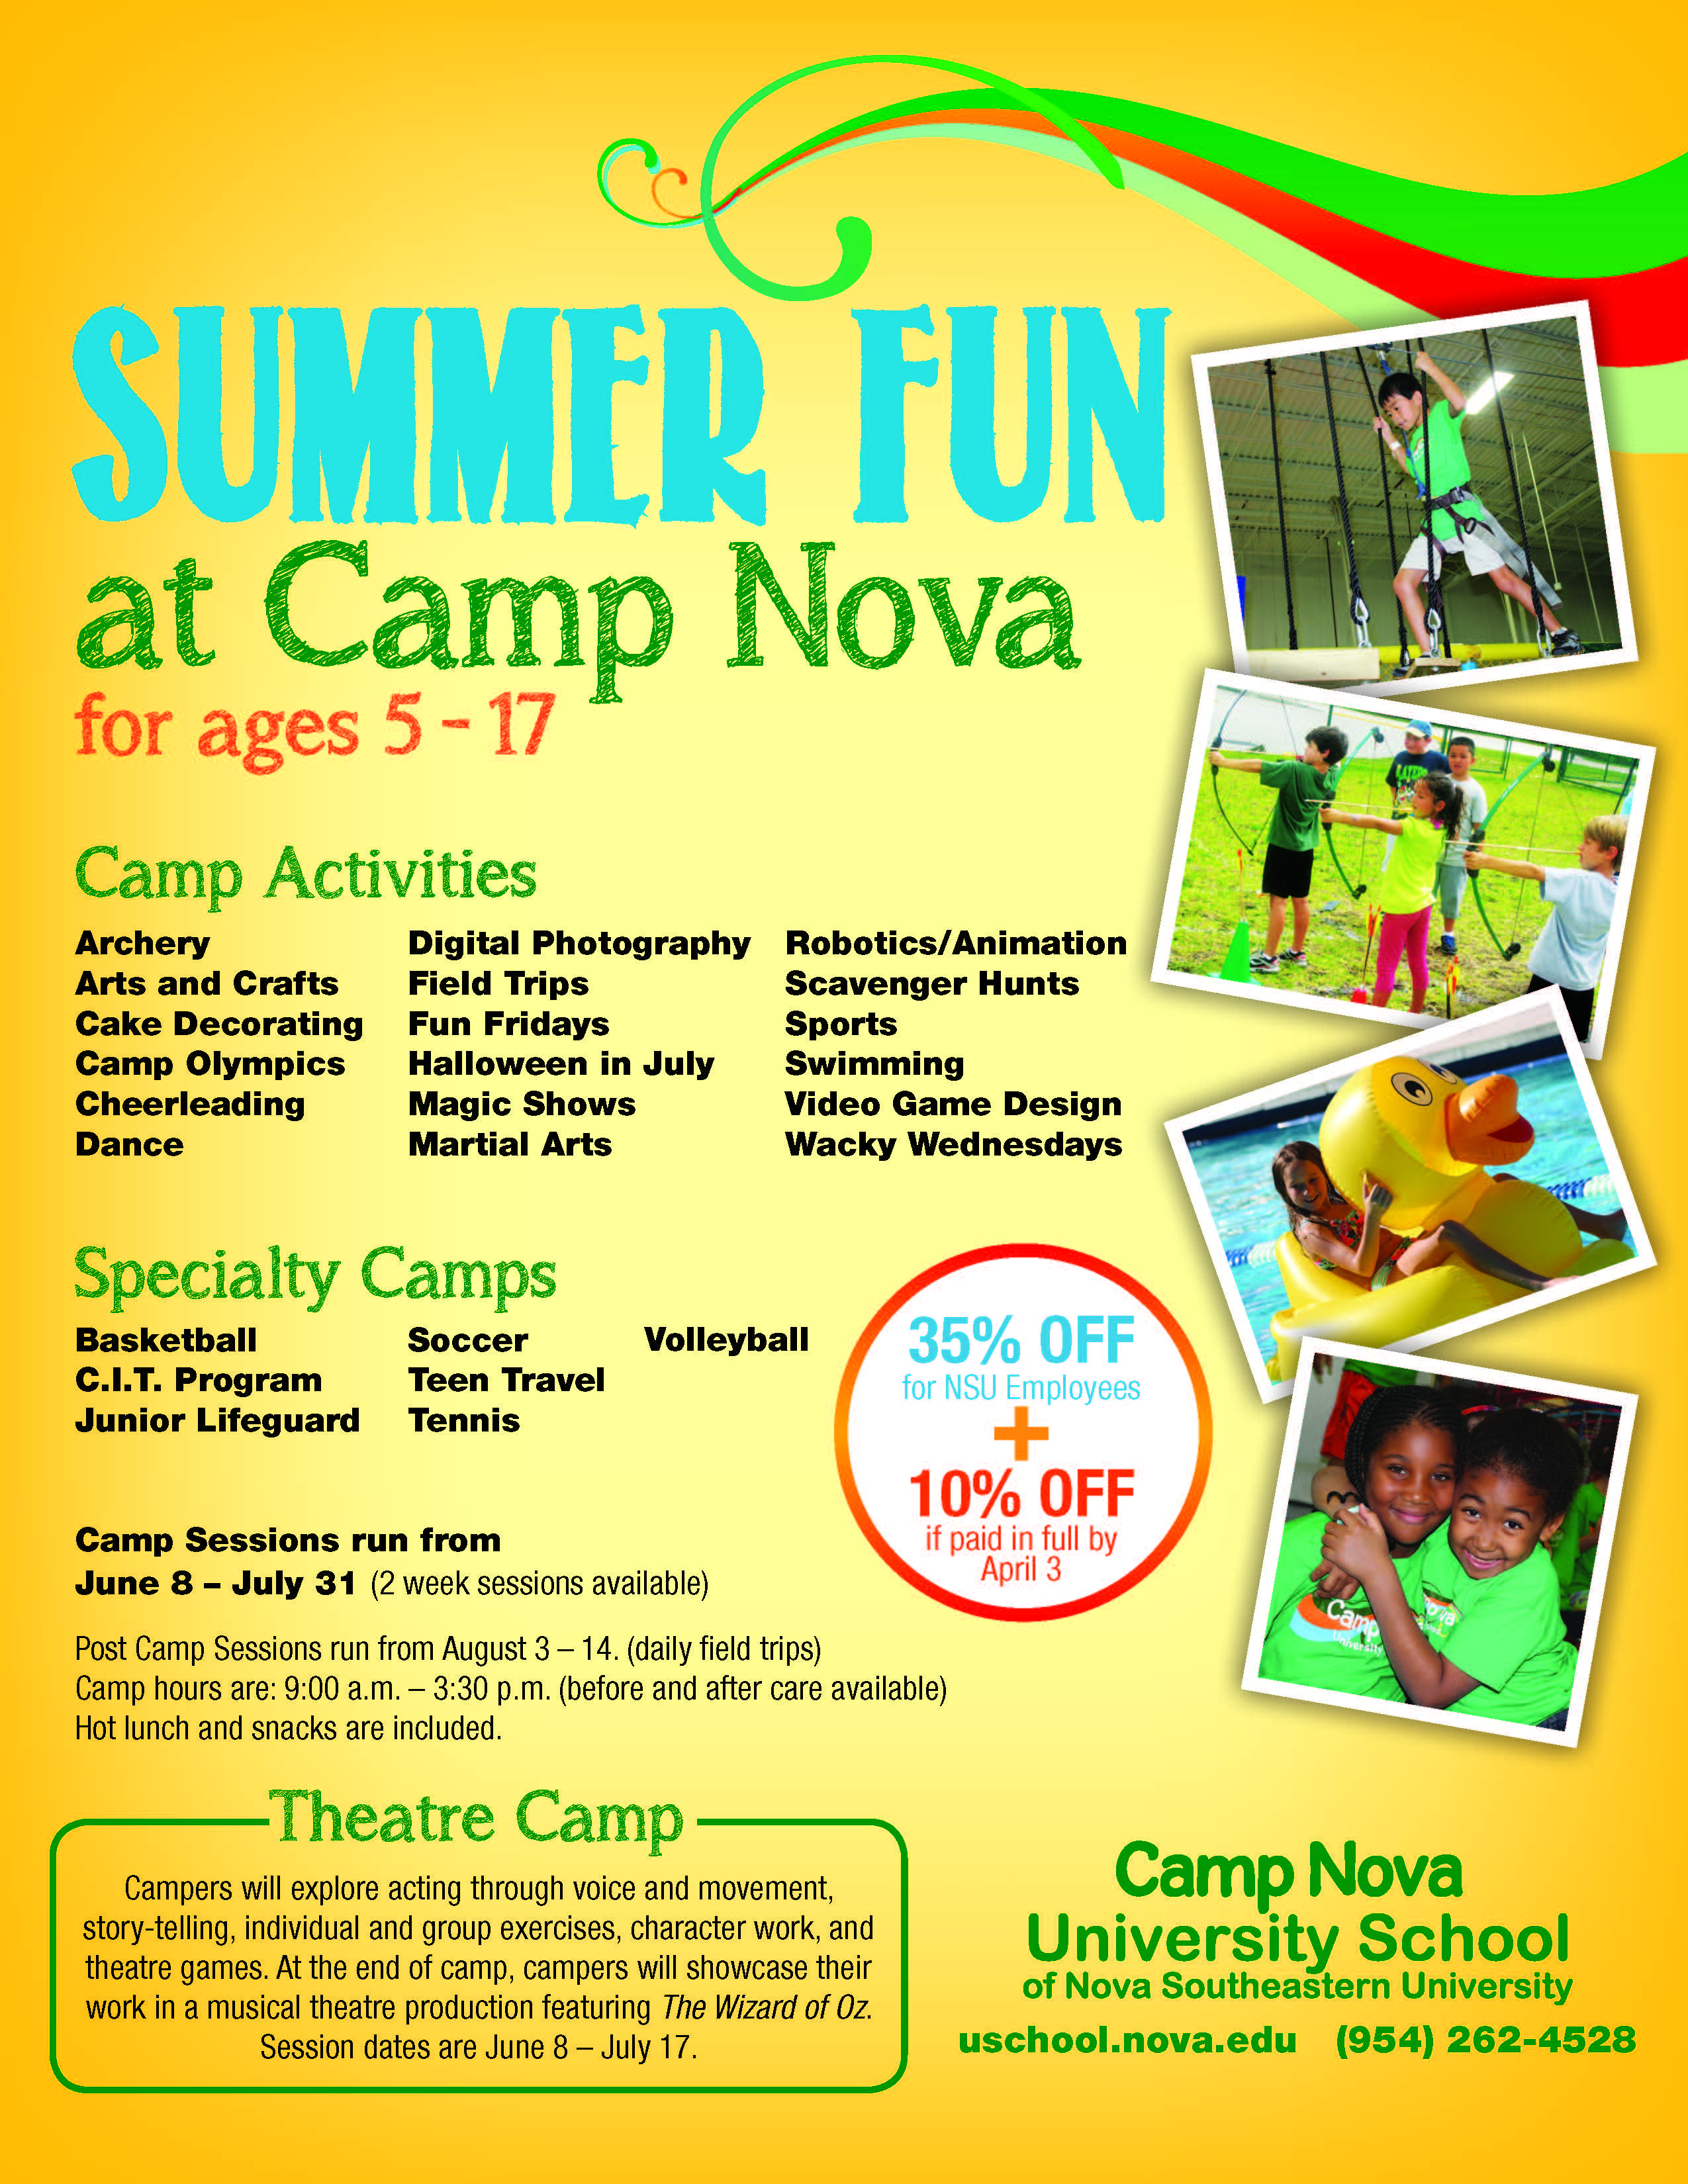 Summer Fun at Camp Nova NSU Newsroom